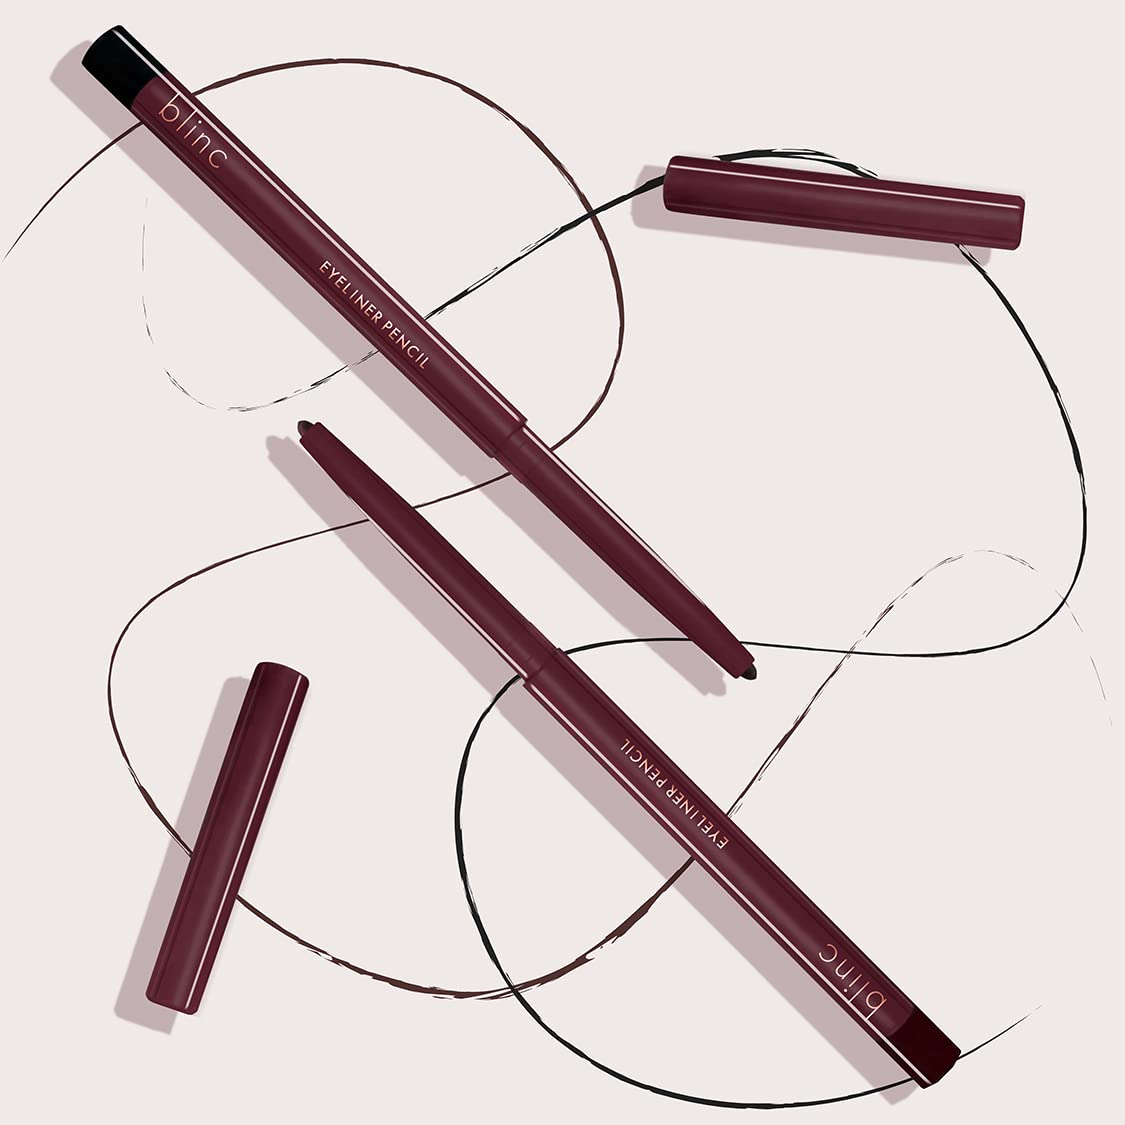 Blinc Eyeliner Pencil, Mechanical Gel Eyeliner Pencil with Built-In Sharpener, Waterproof, Smudge-proof, Transfer-proof, Ultra Long-Wearing, Clean, Vegan and Cruelty-Free, Brown, 0.5g / 0.017 Fl. Oz